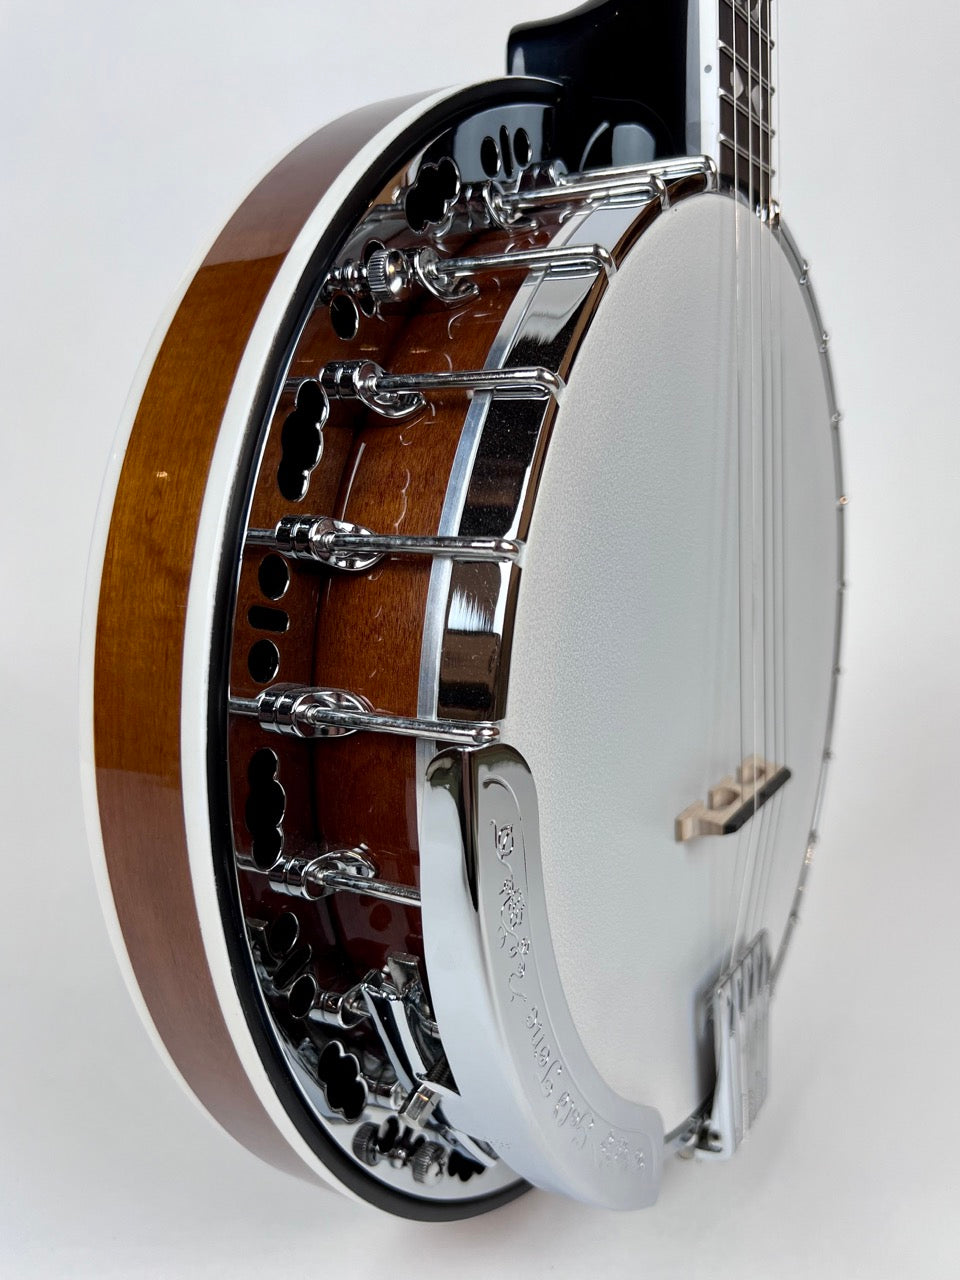 Gold Tone BG150F Resonator Banjo